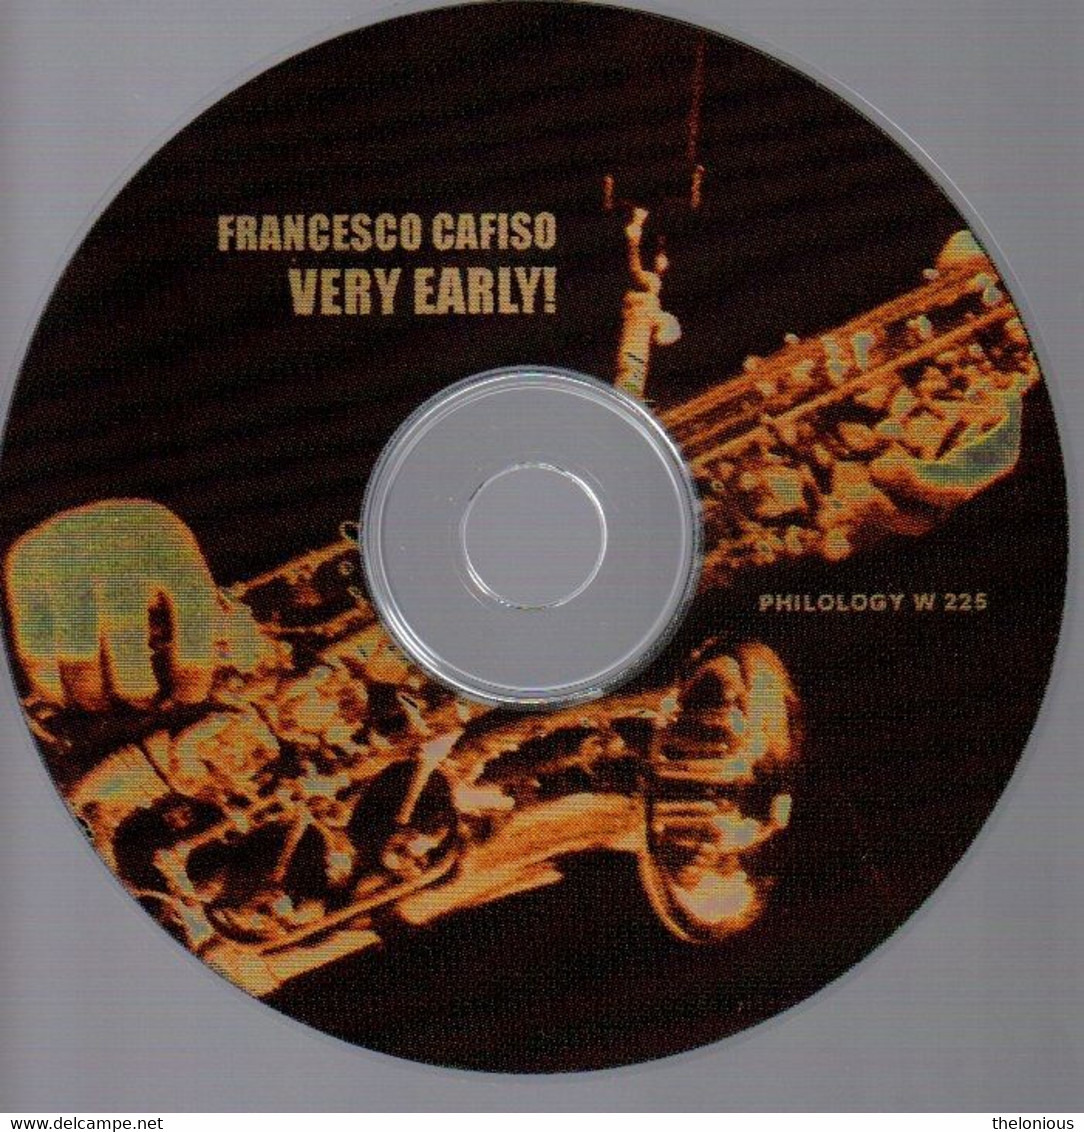 # CD: Francesco Cafiso - Very Early! - Philology W 225 - Jazz